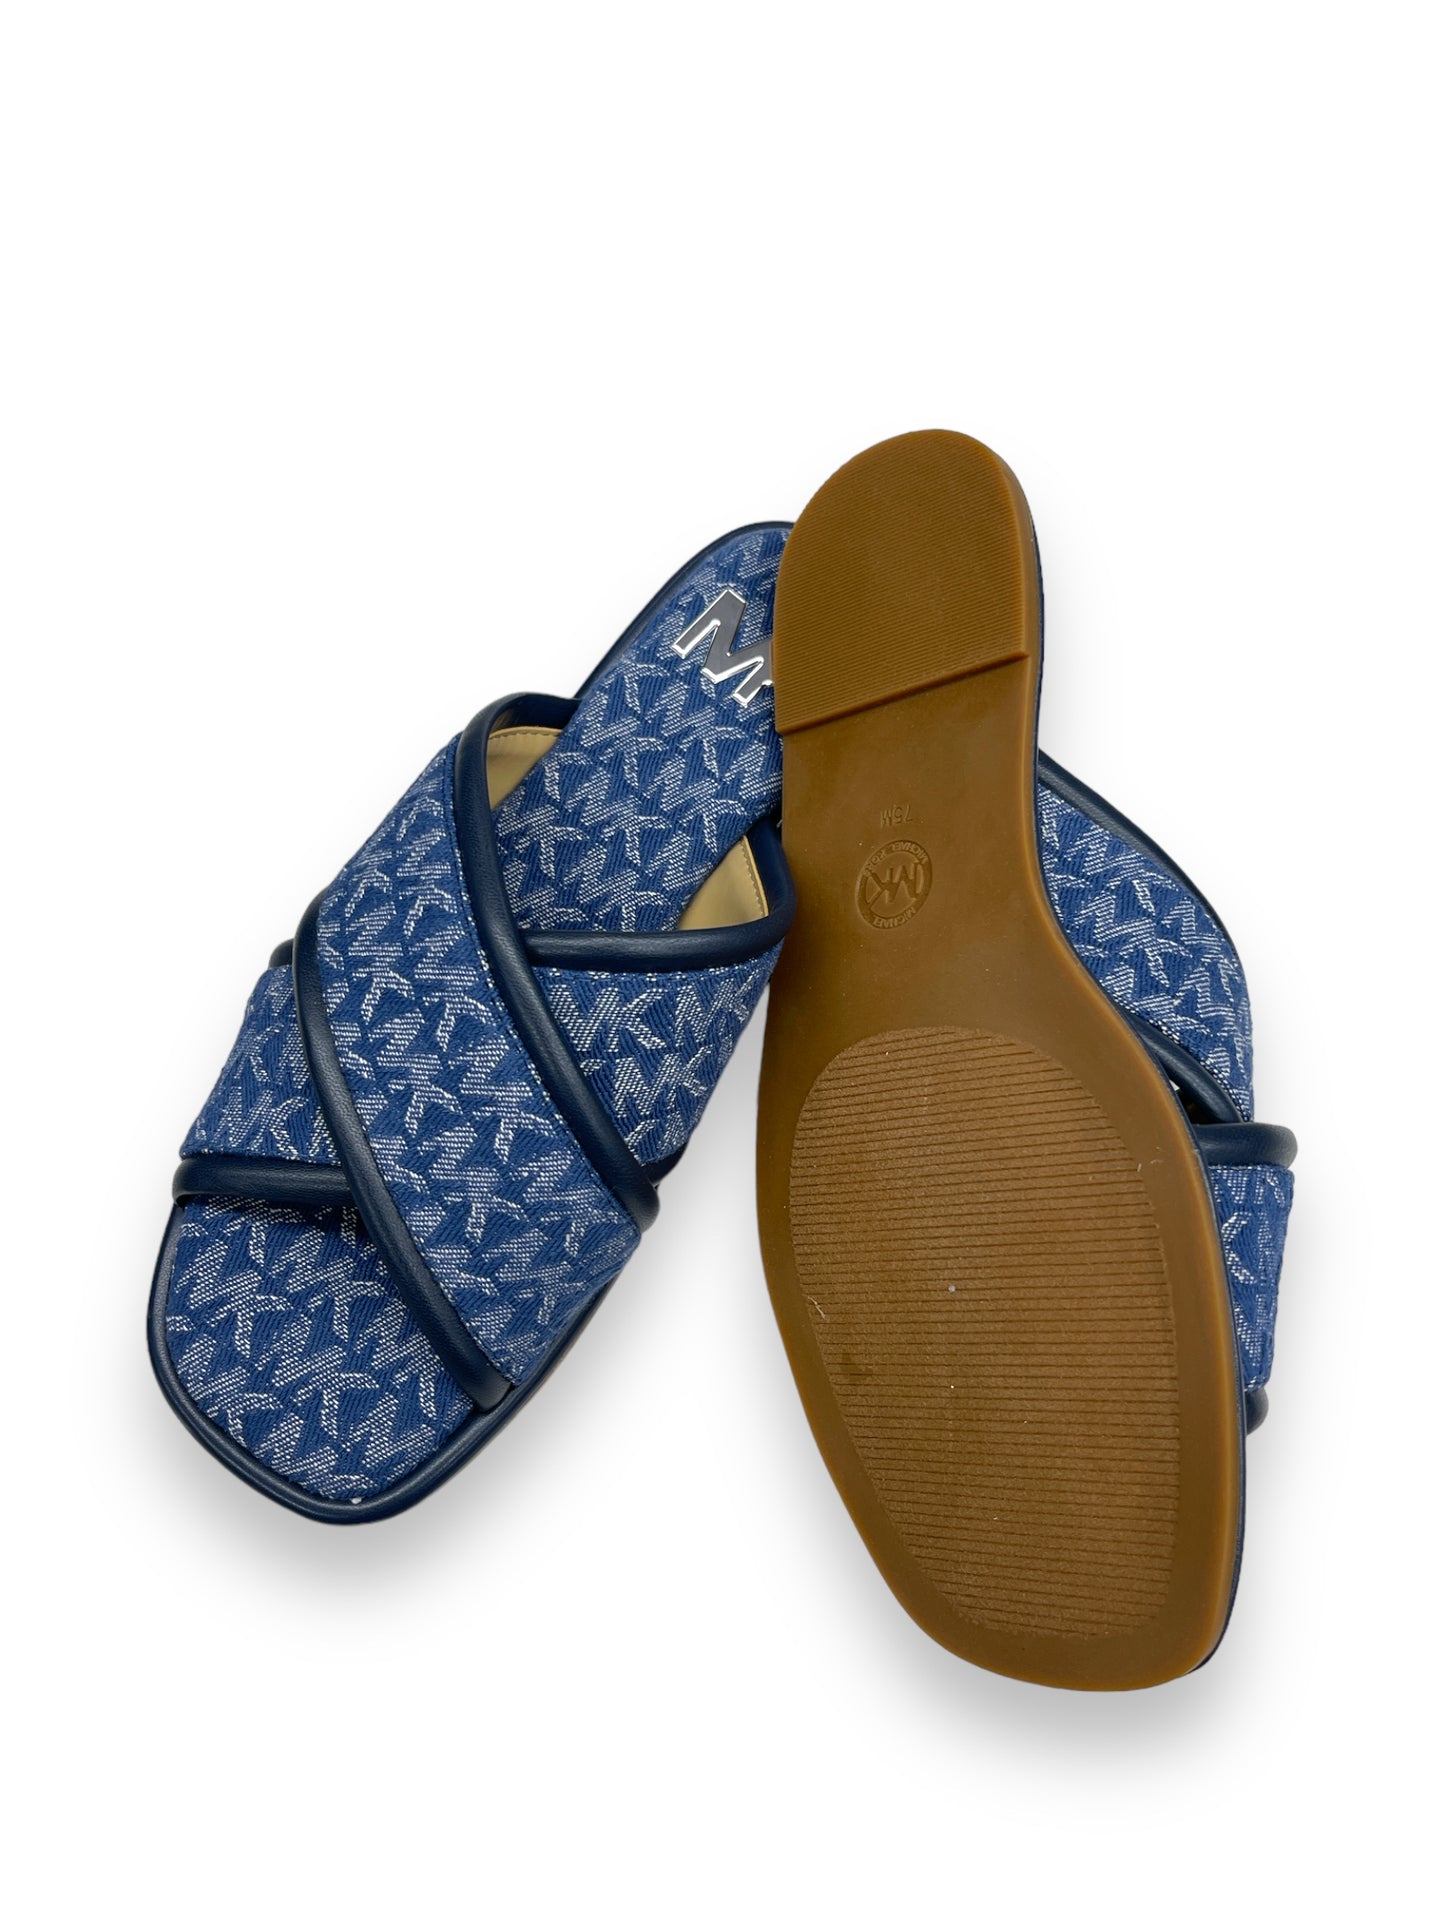 Sandals Designer By Michael Kors  Size: 7.5